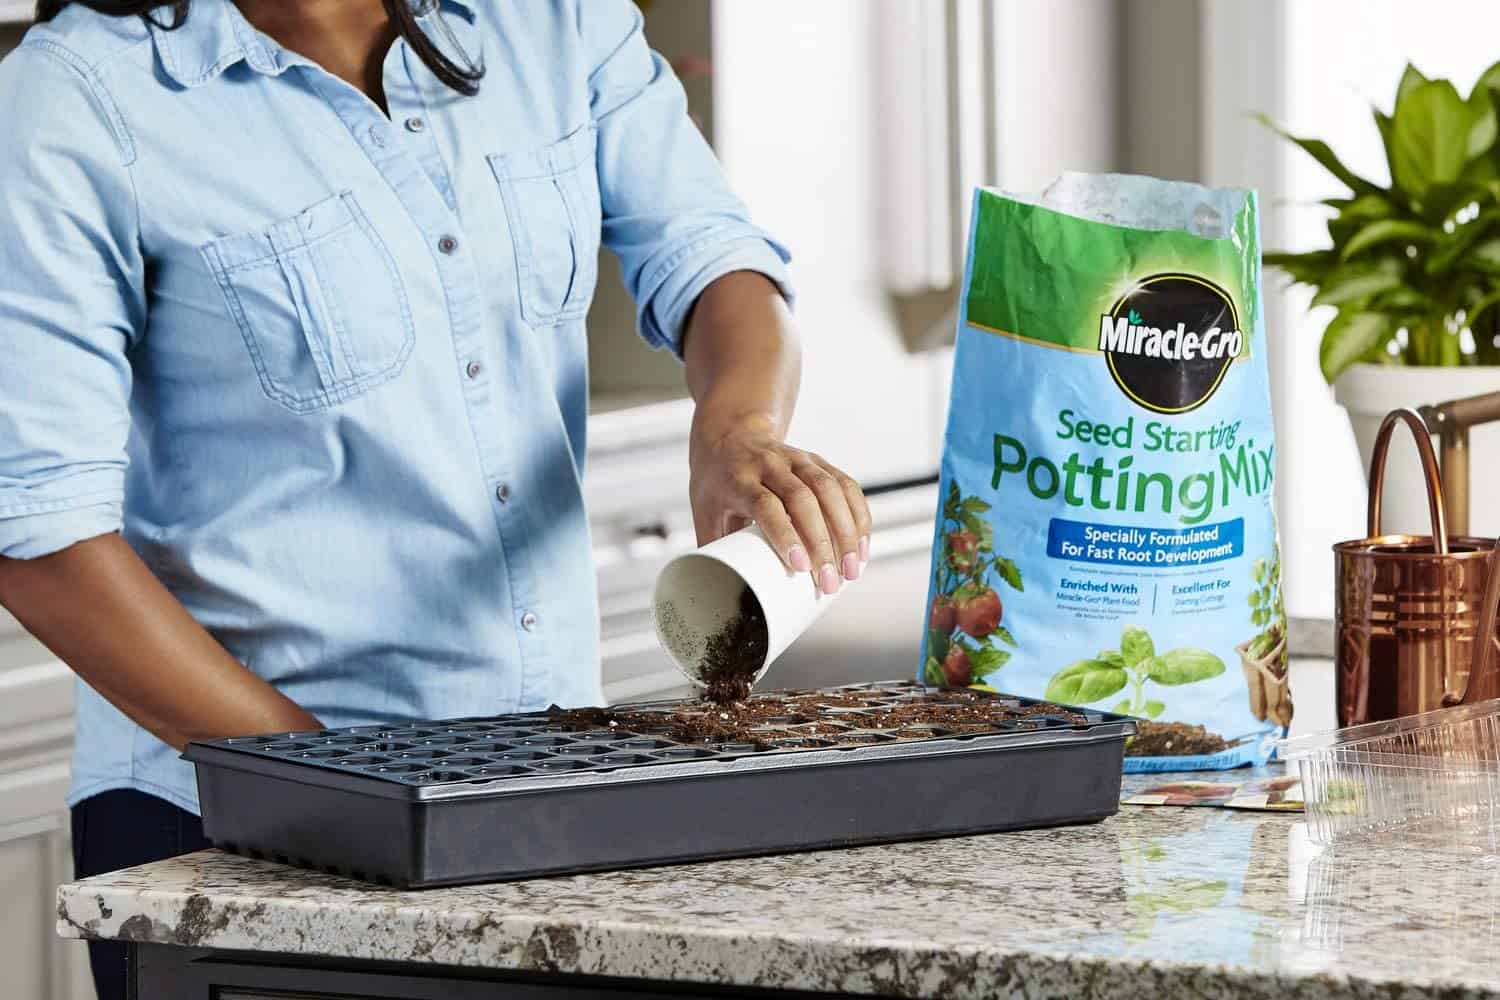 Invest in the Potting Soil